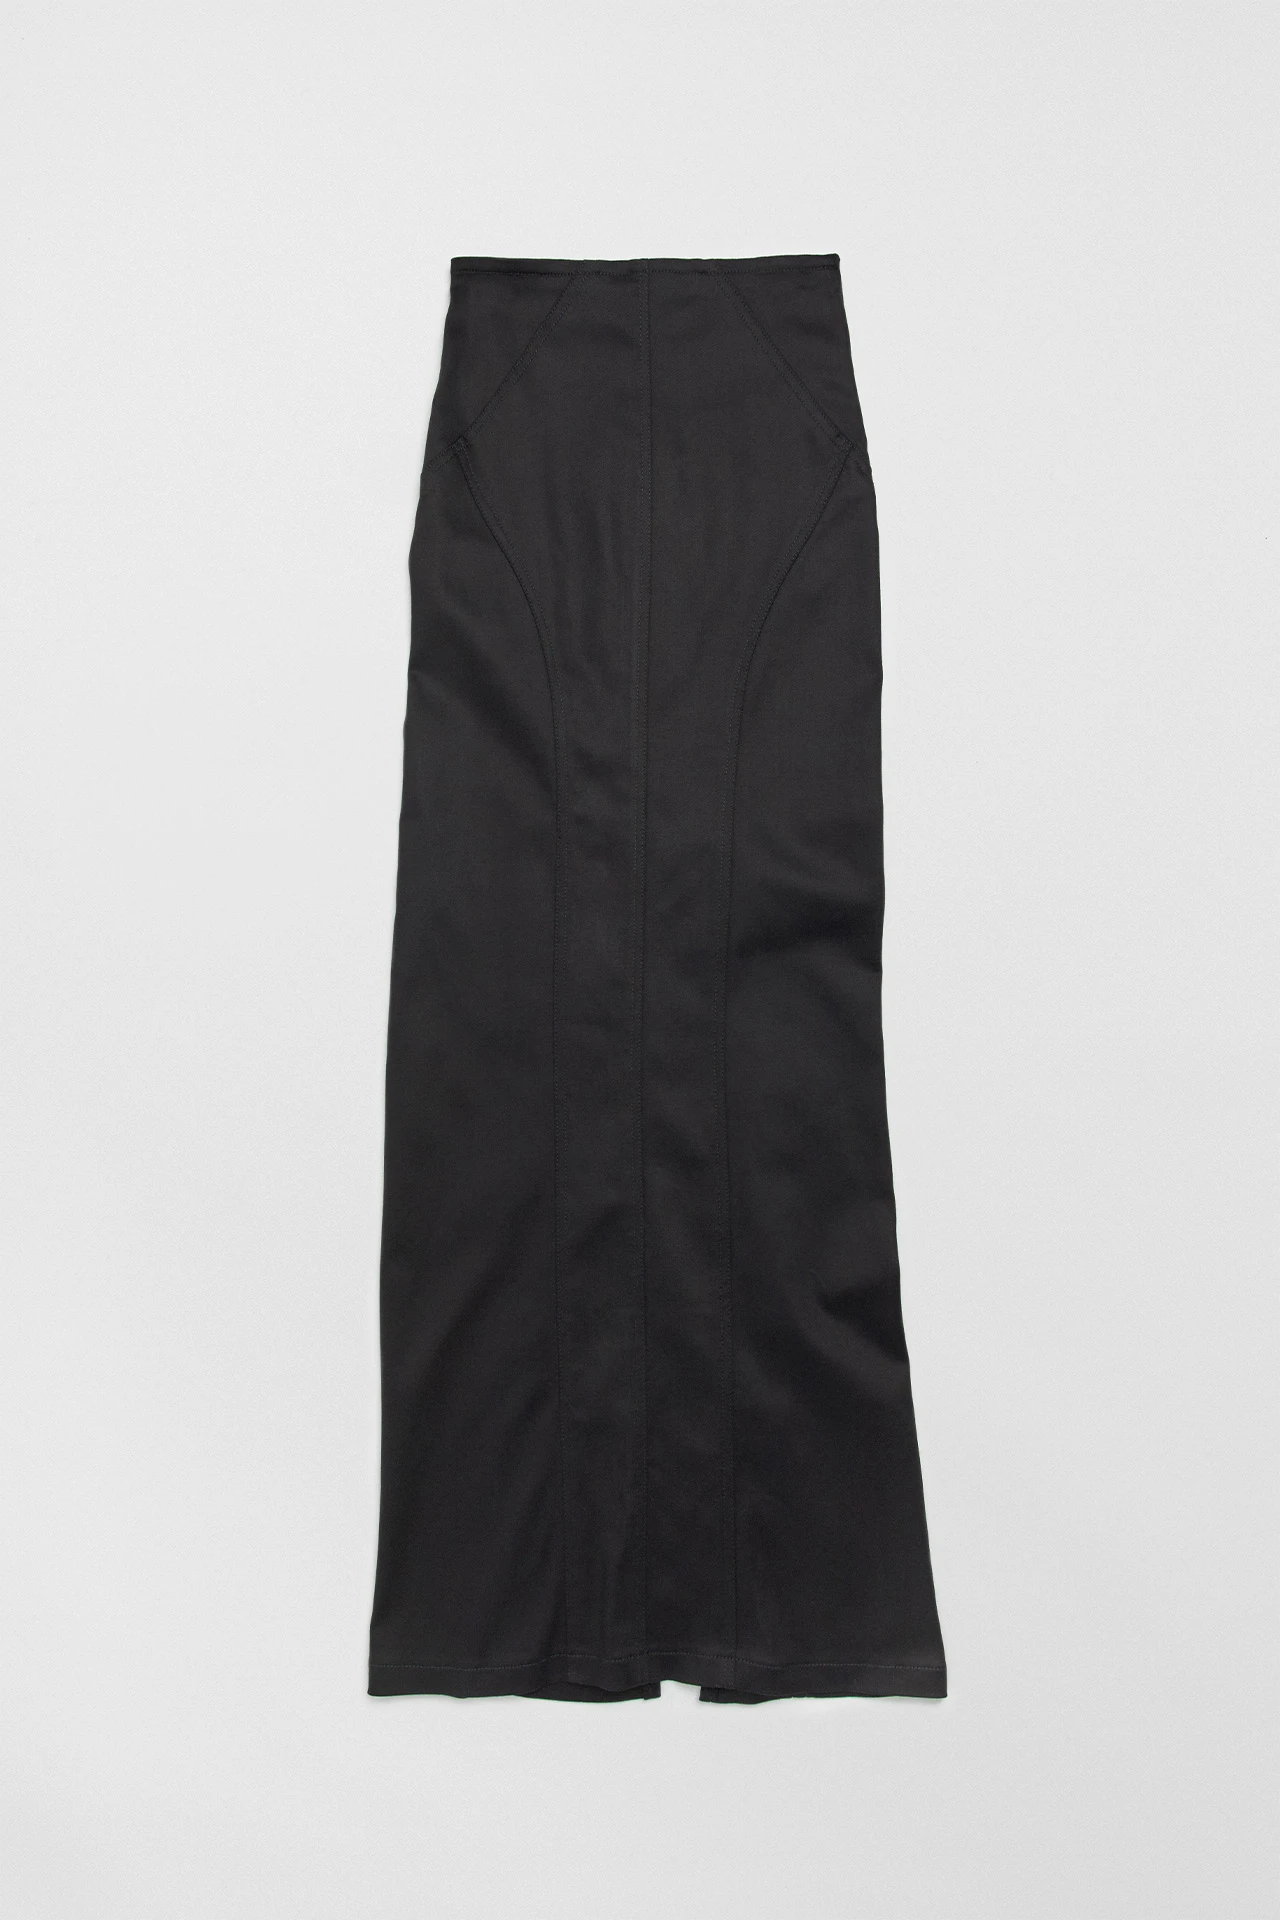 Miista-luz-black-skirt-01